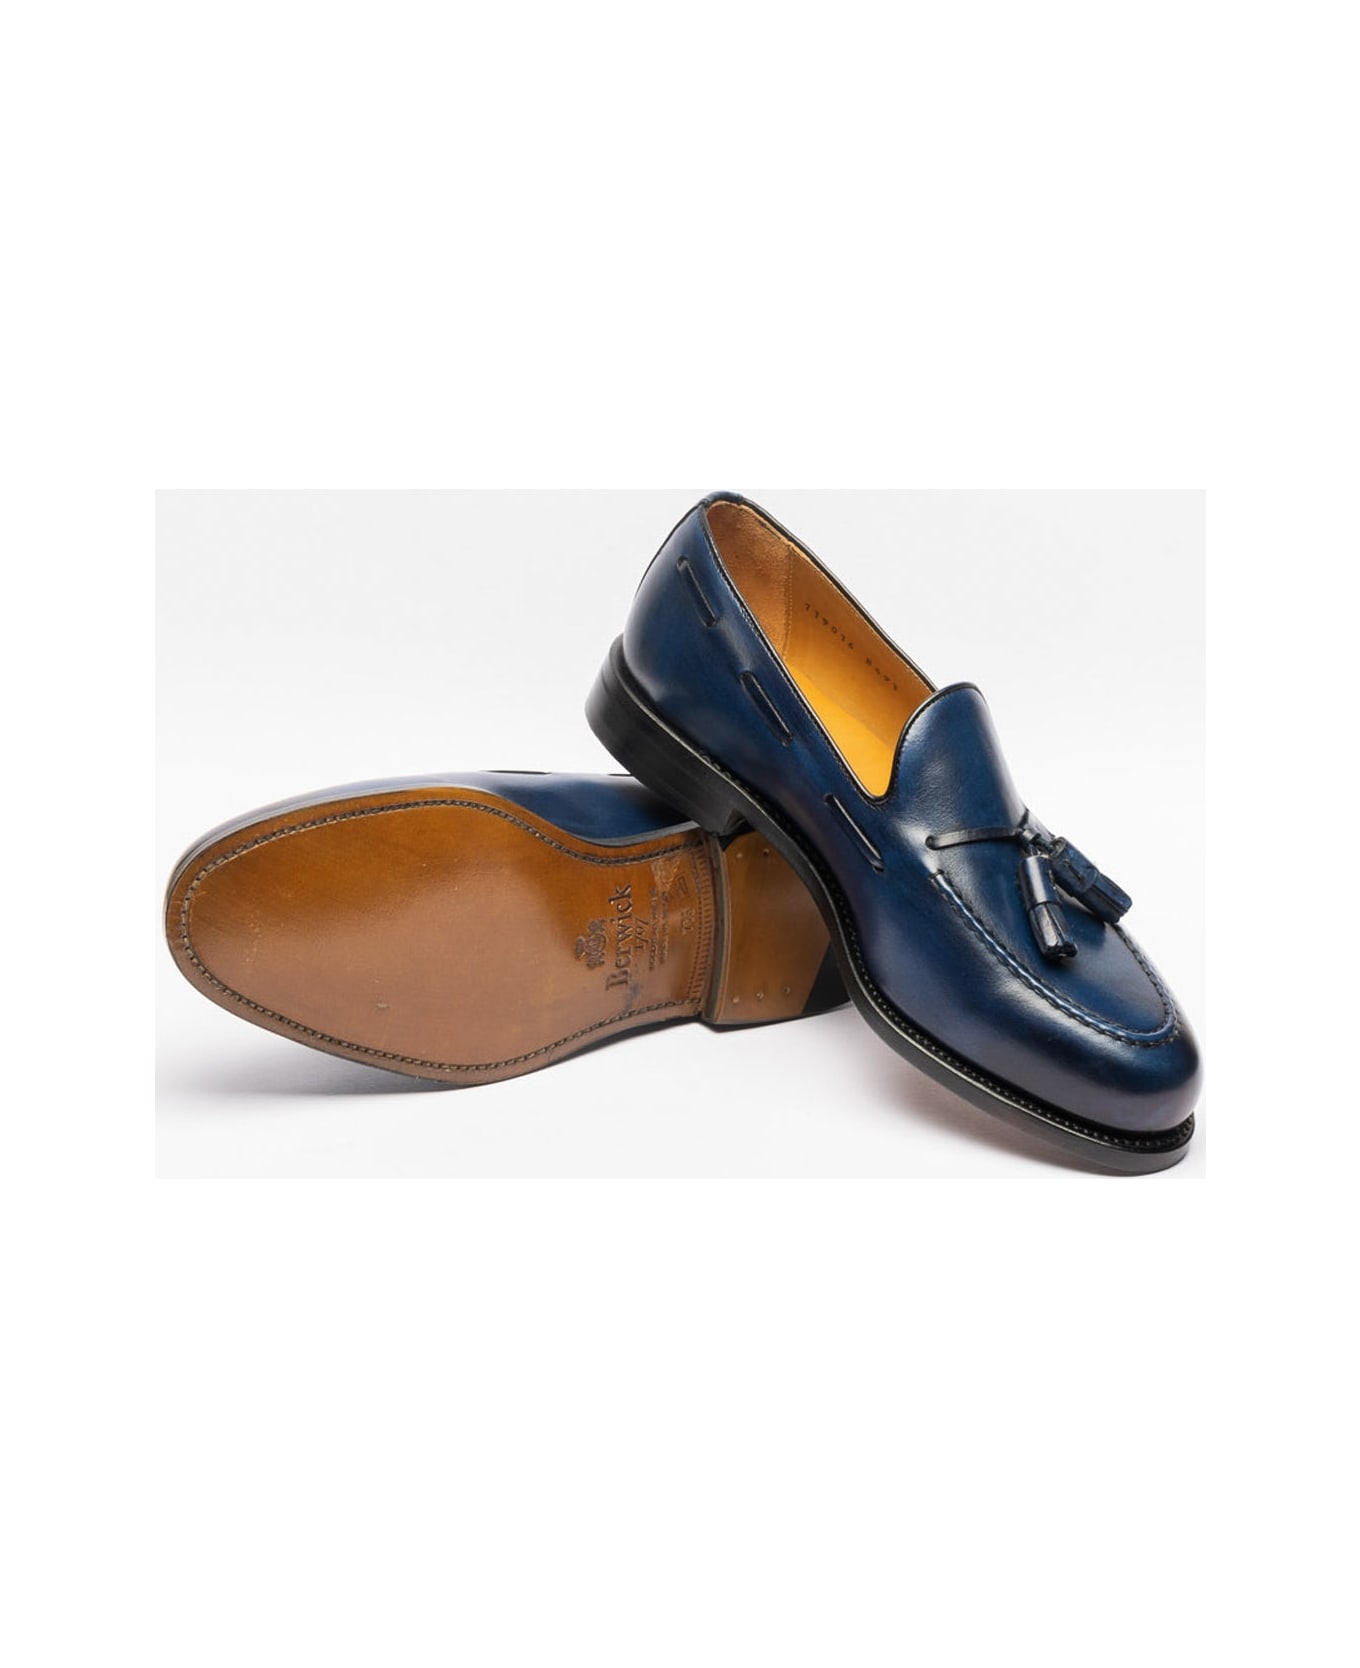 Berwick 1707 Blue Leather Tassels Loafer - Blu